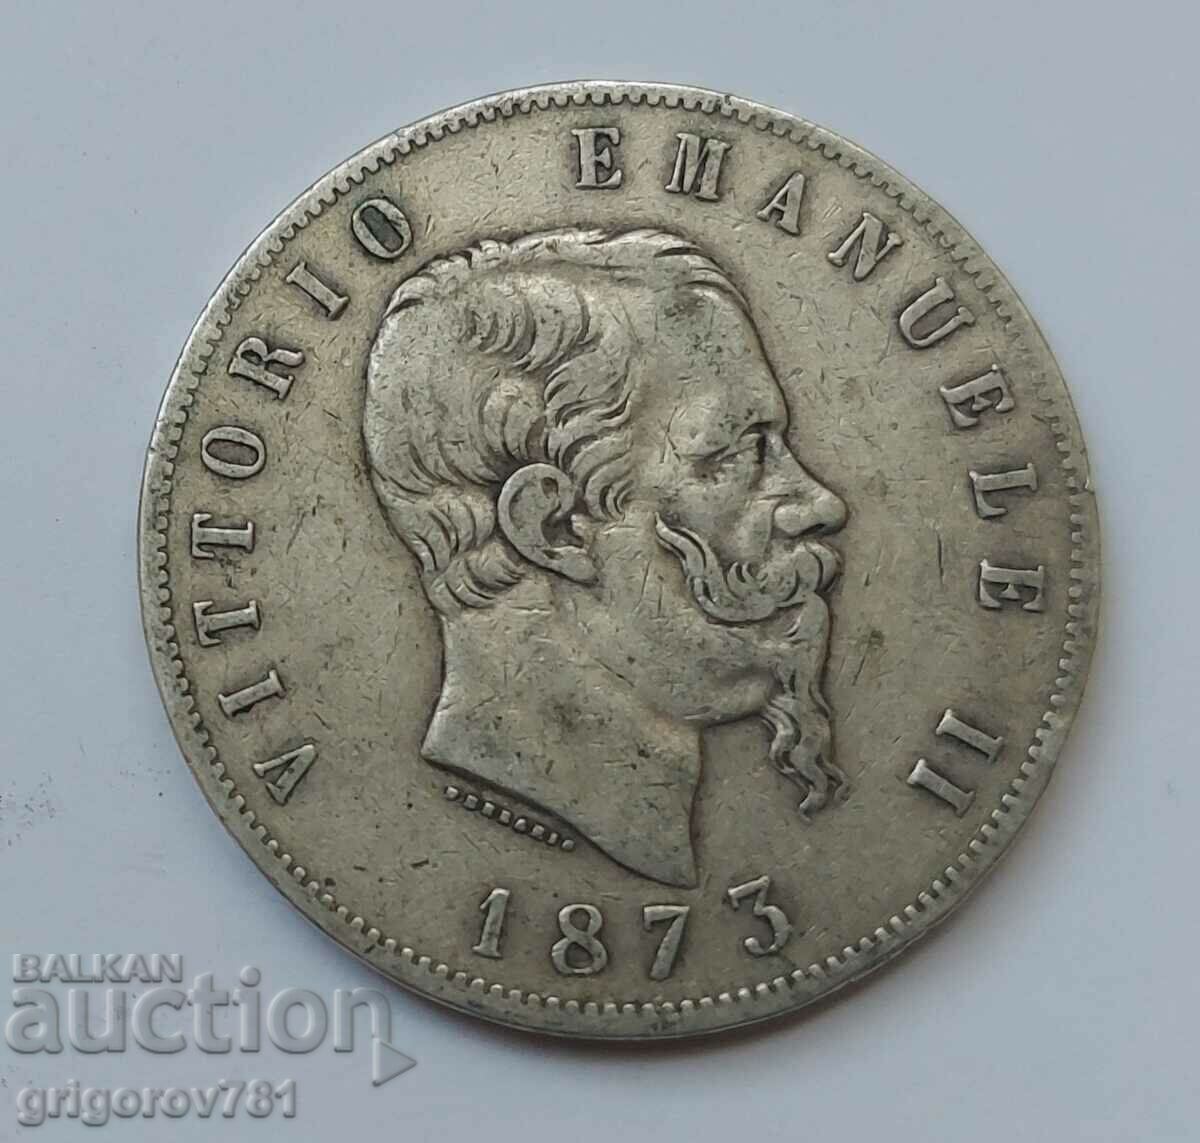 5 Lire Argint Italia 1873 - Moneda de argint #238